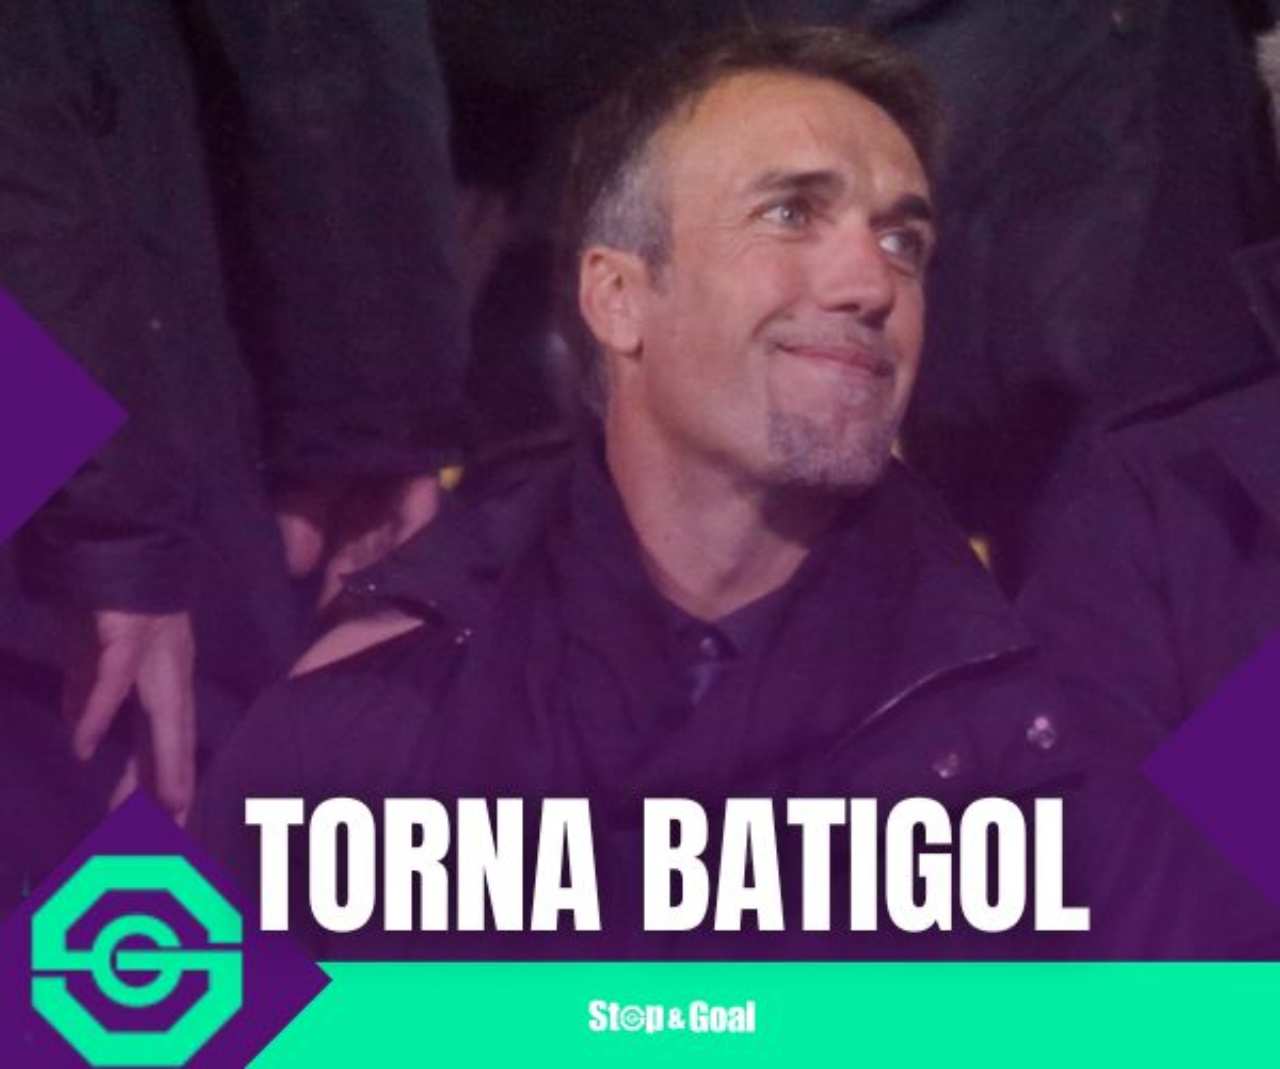 Gabriel Omar Batistuta, Serie A - stopandgoal.com (La Presse)